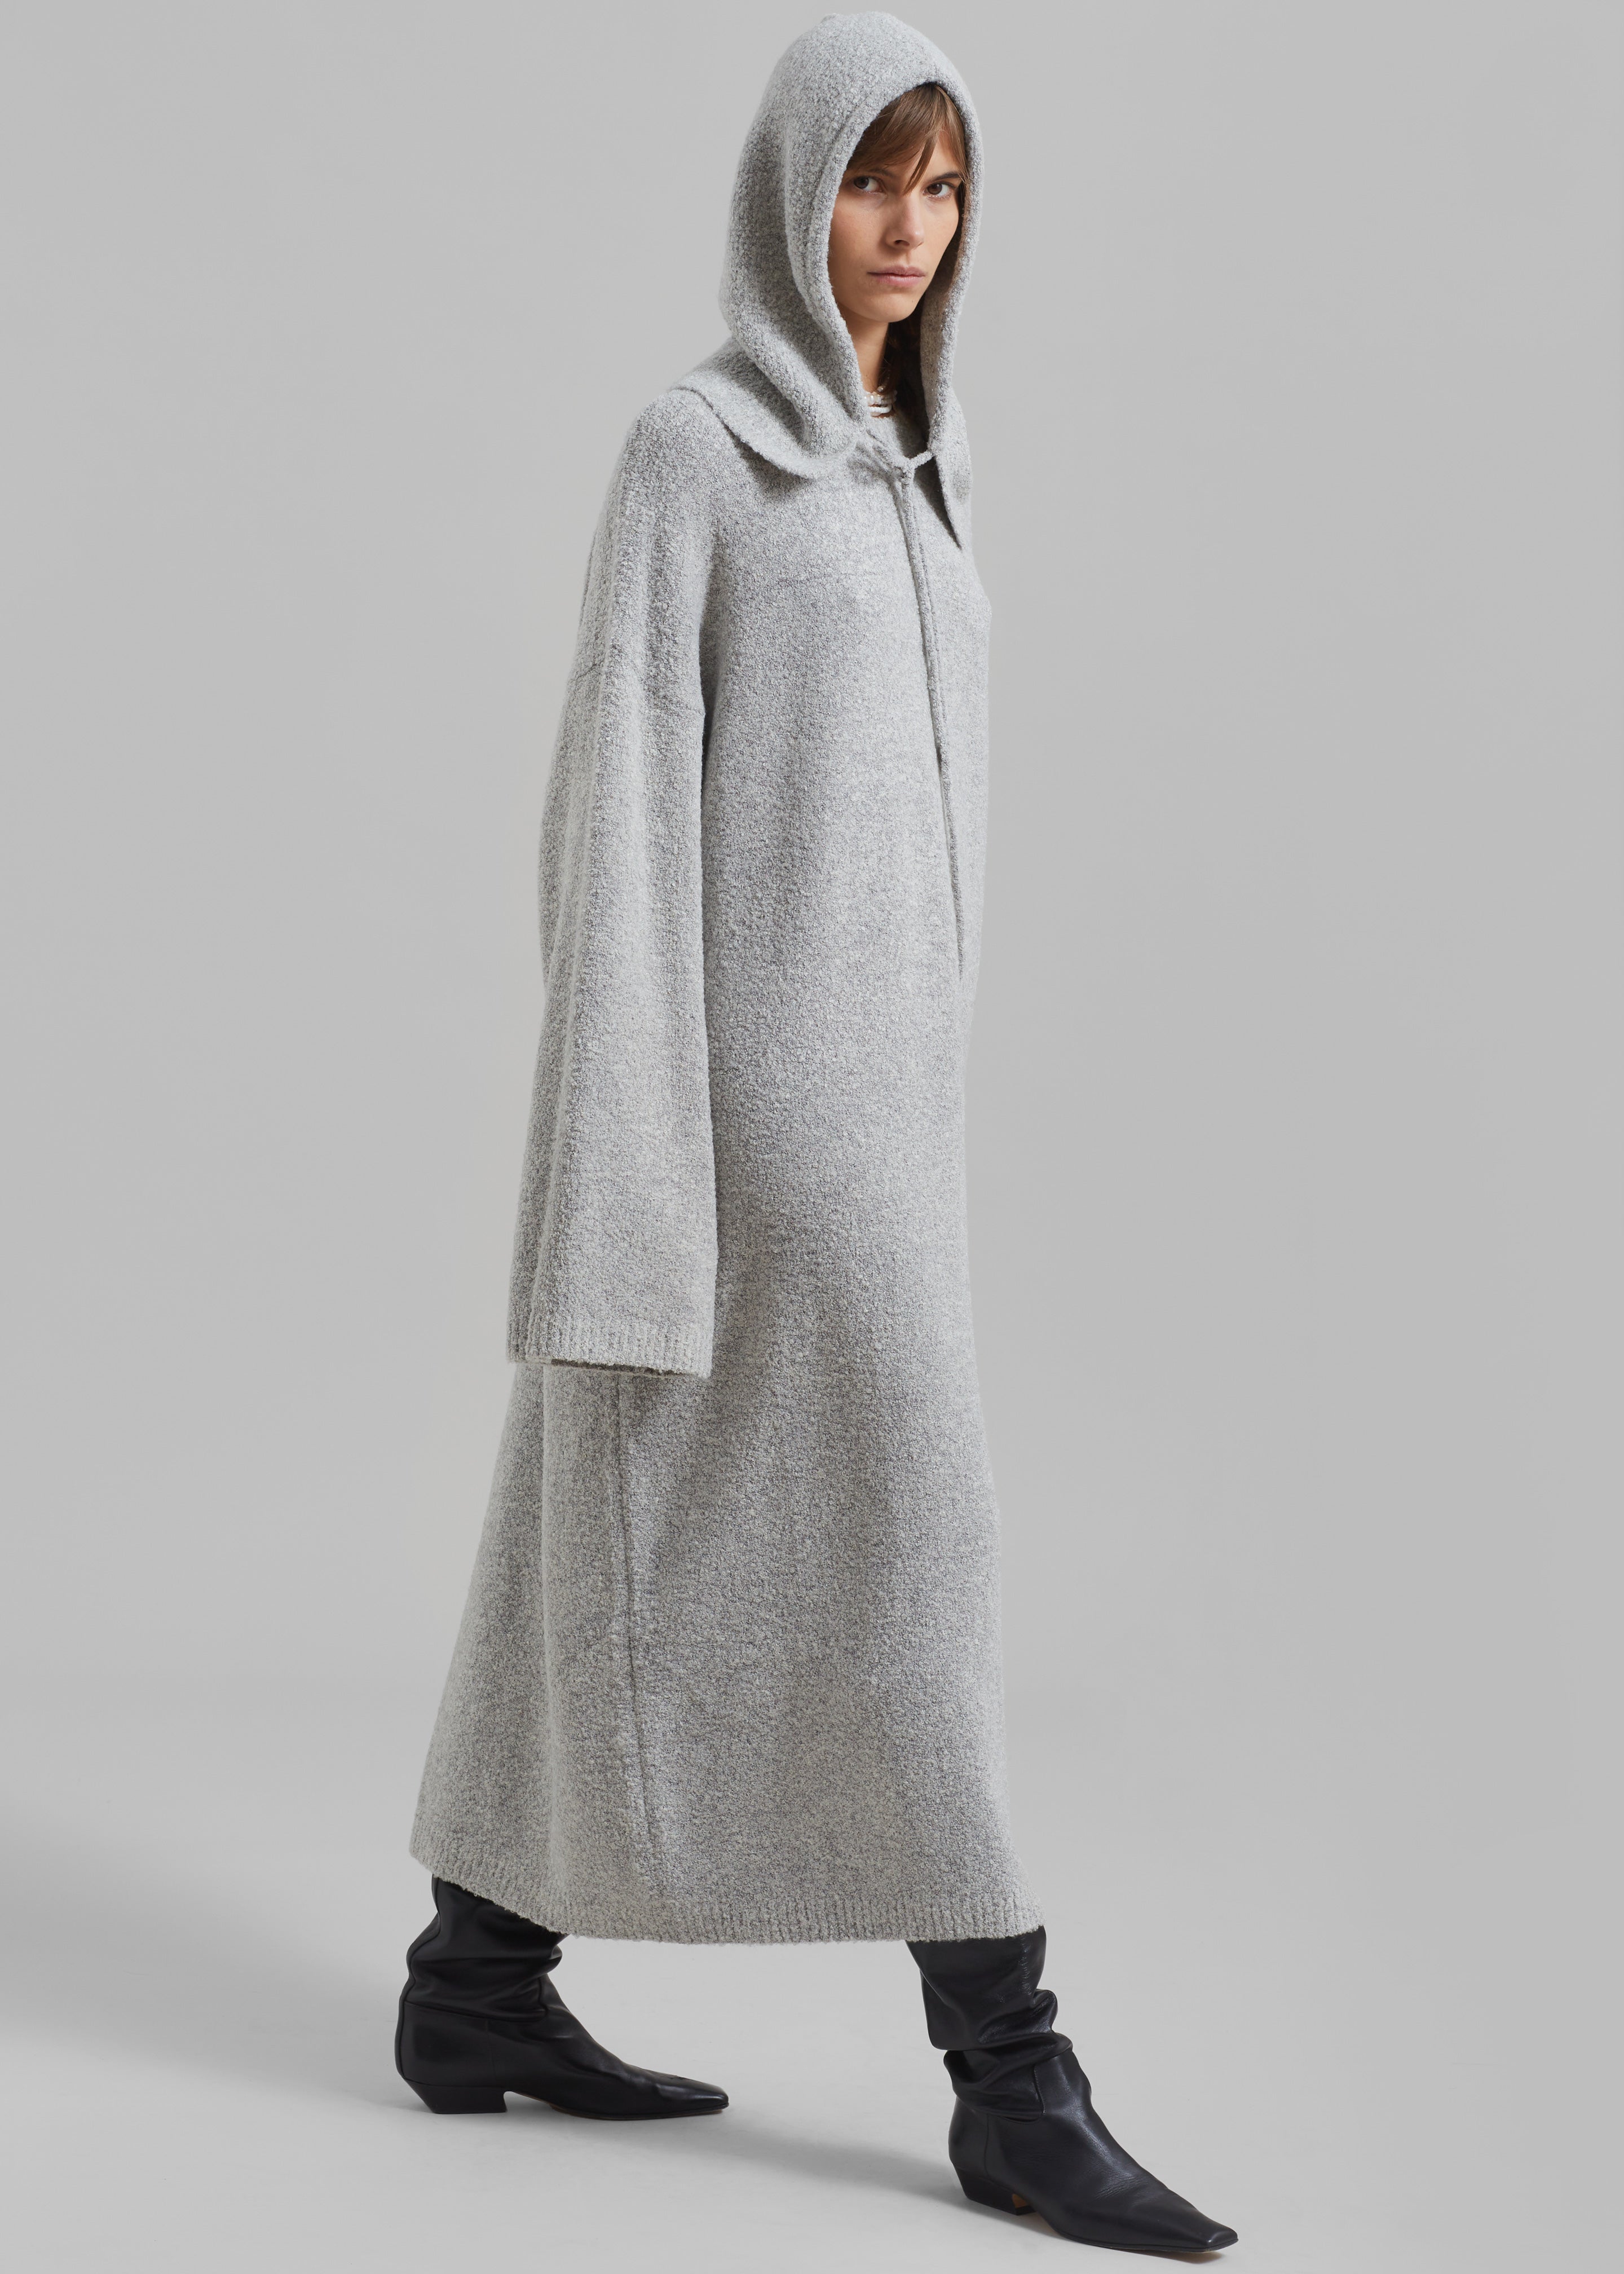 Alba Long Hooded Dress - Grey - 1